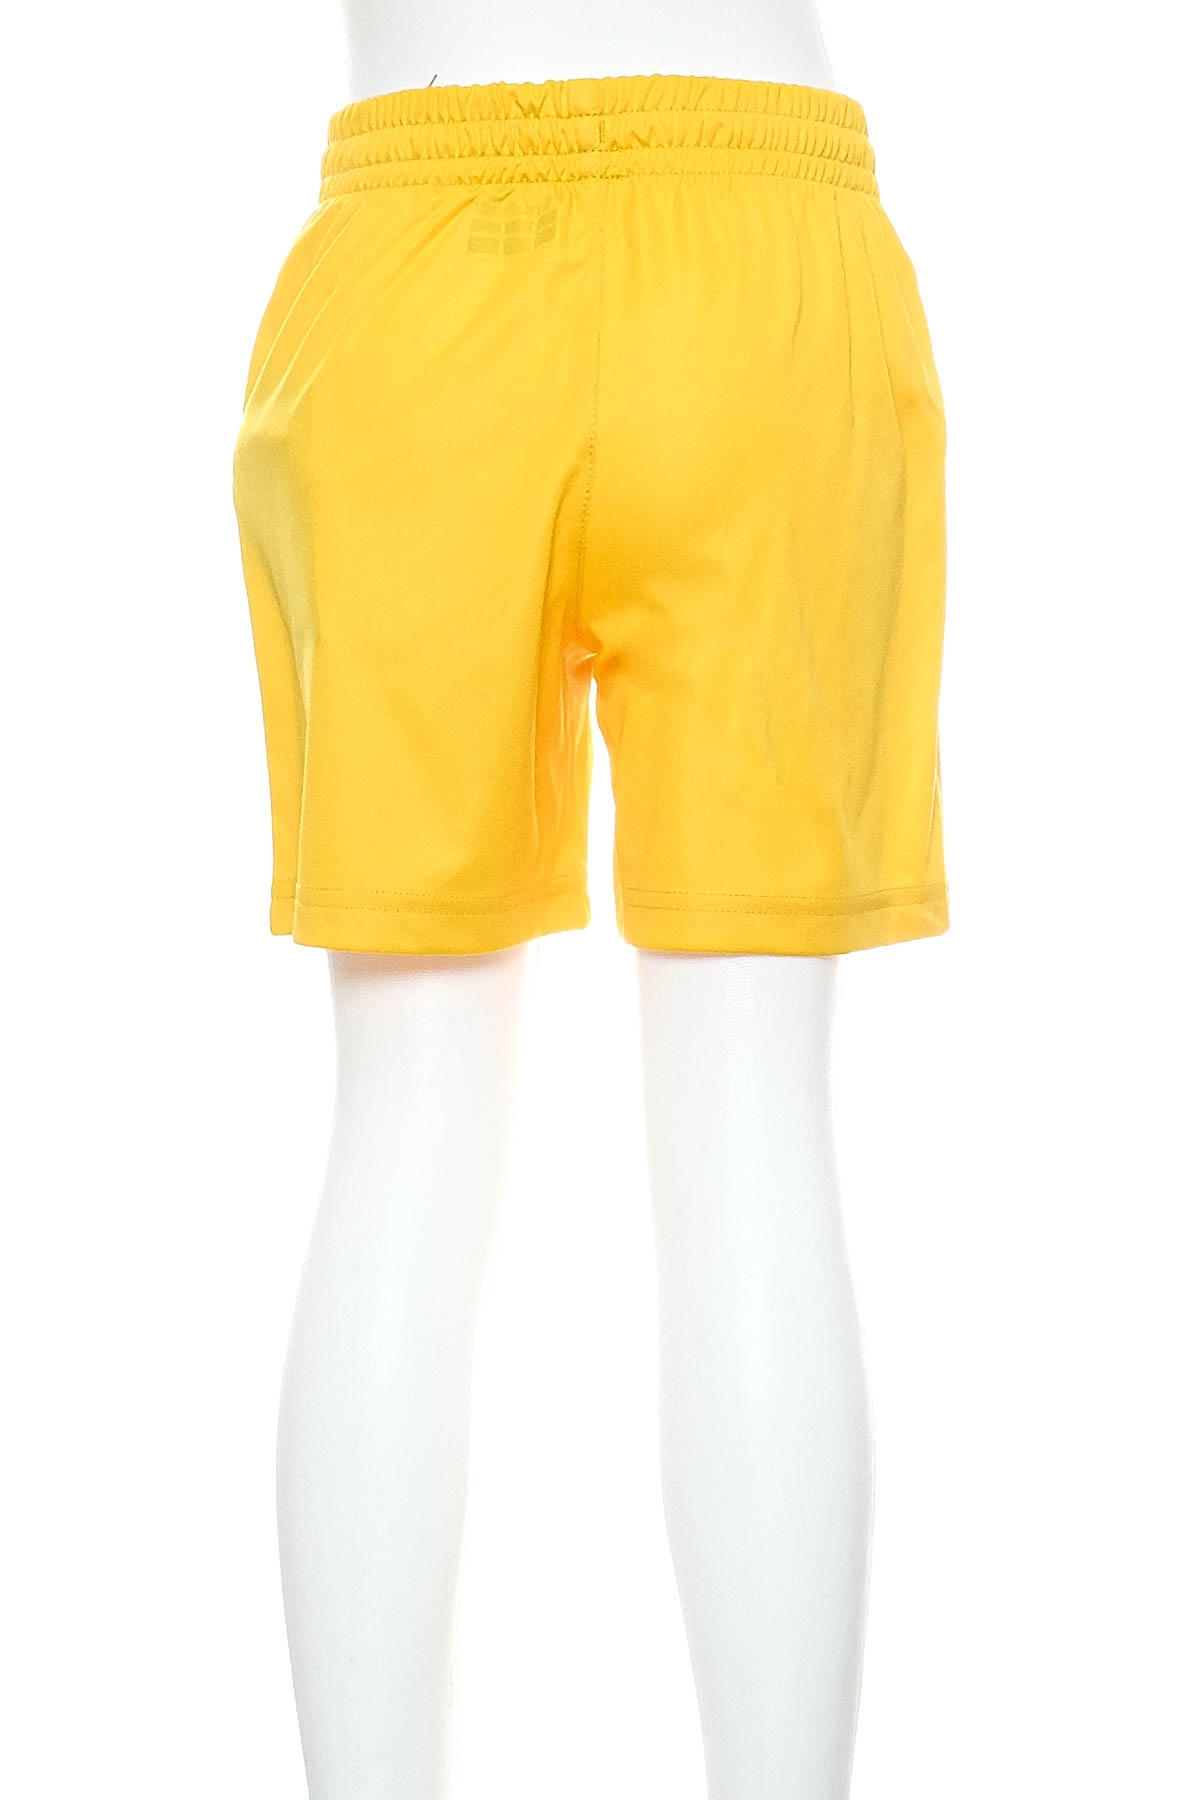 Shorts for boys - Hummel - 1